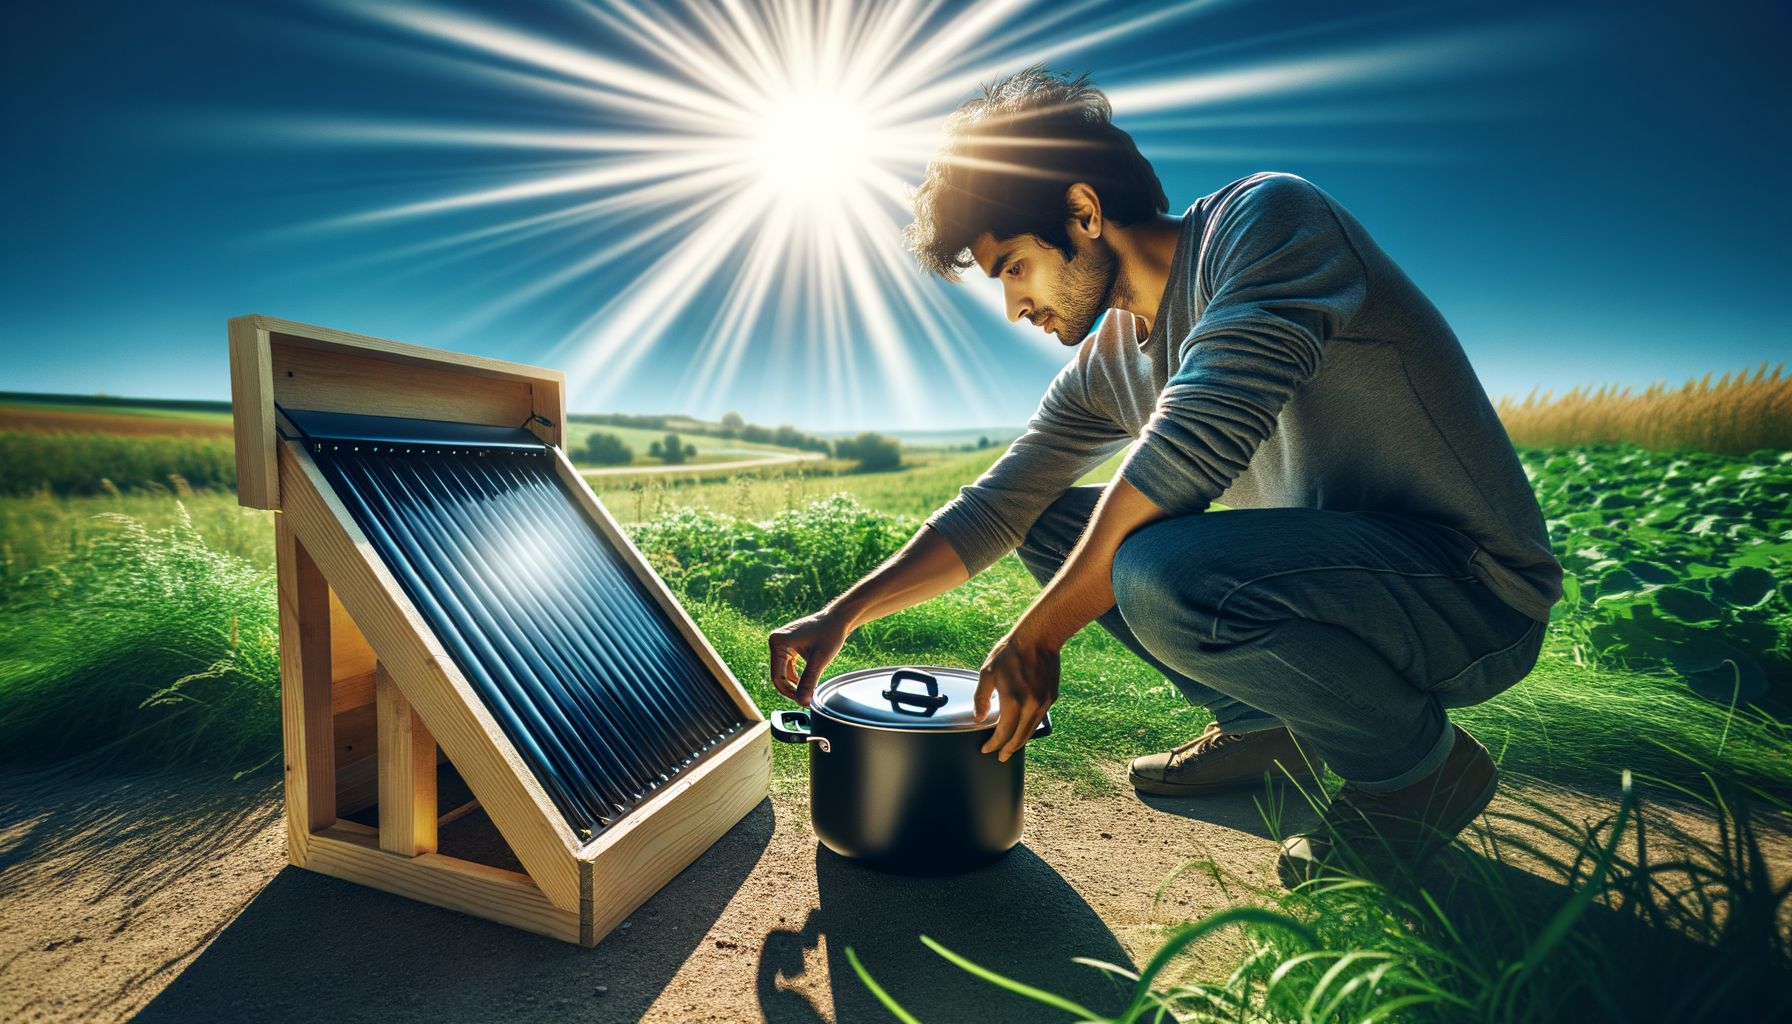 ALT: Person using a homemade solar cooker